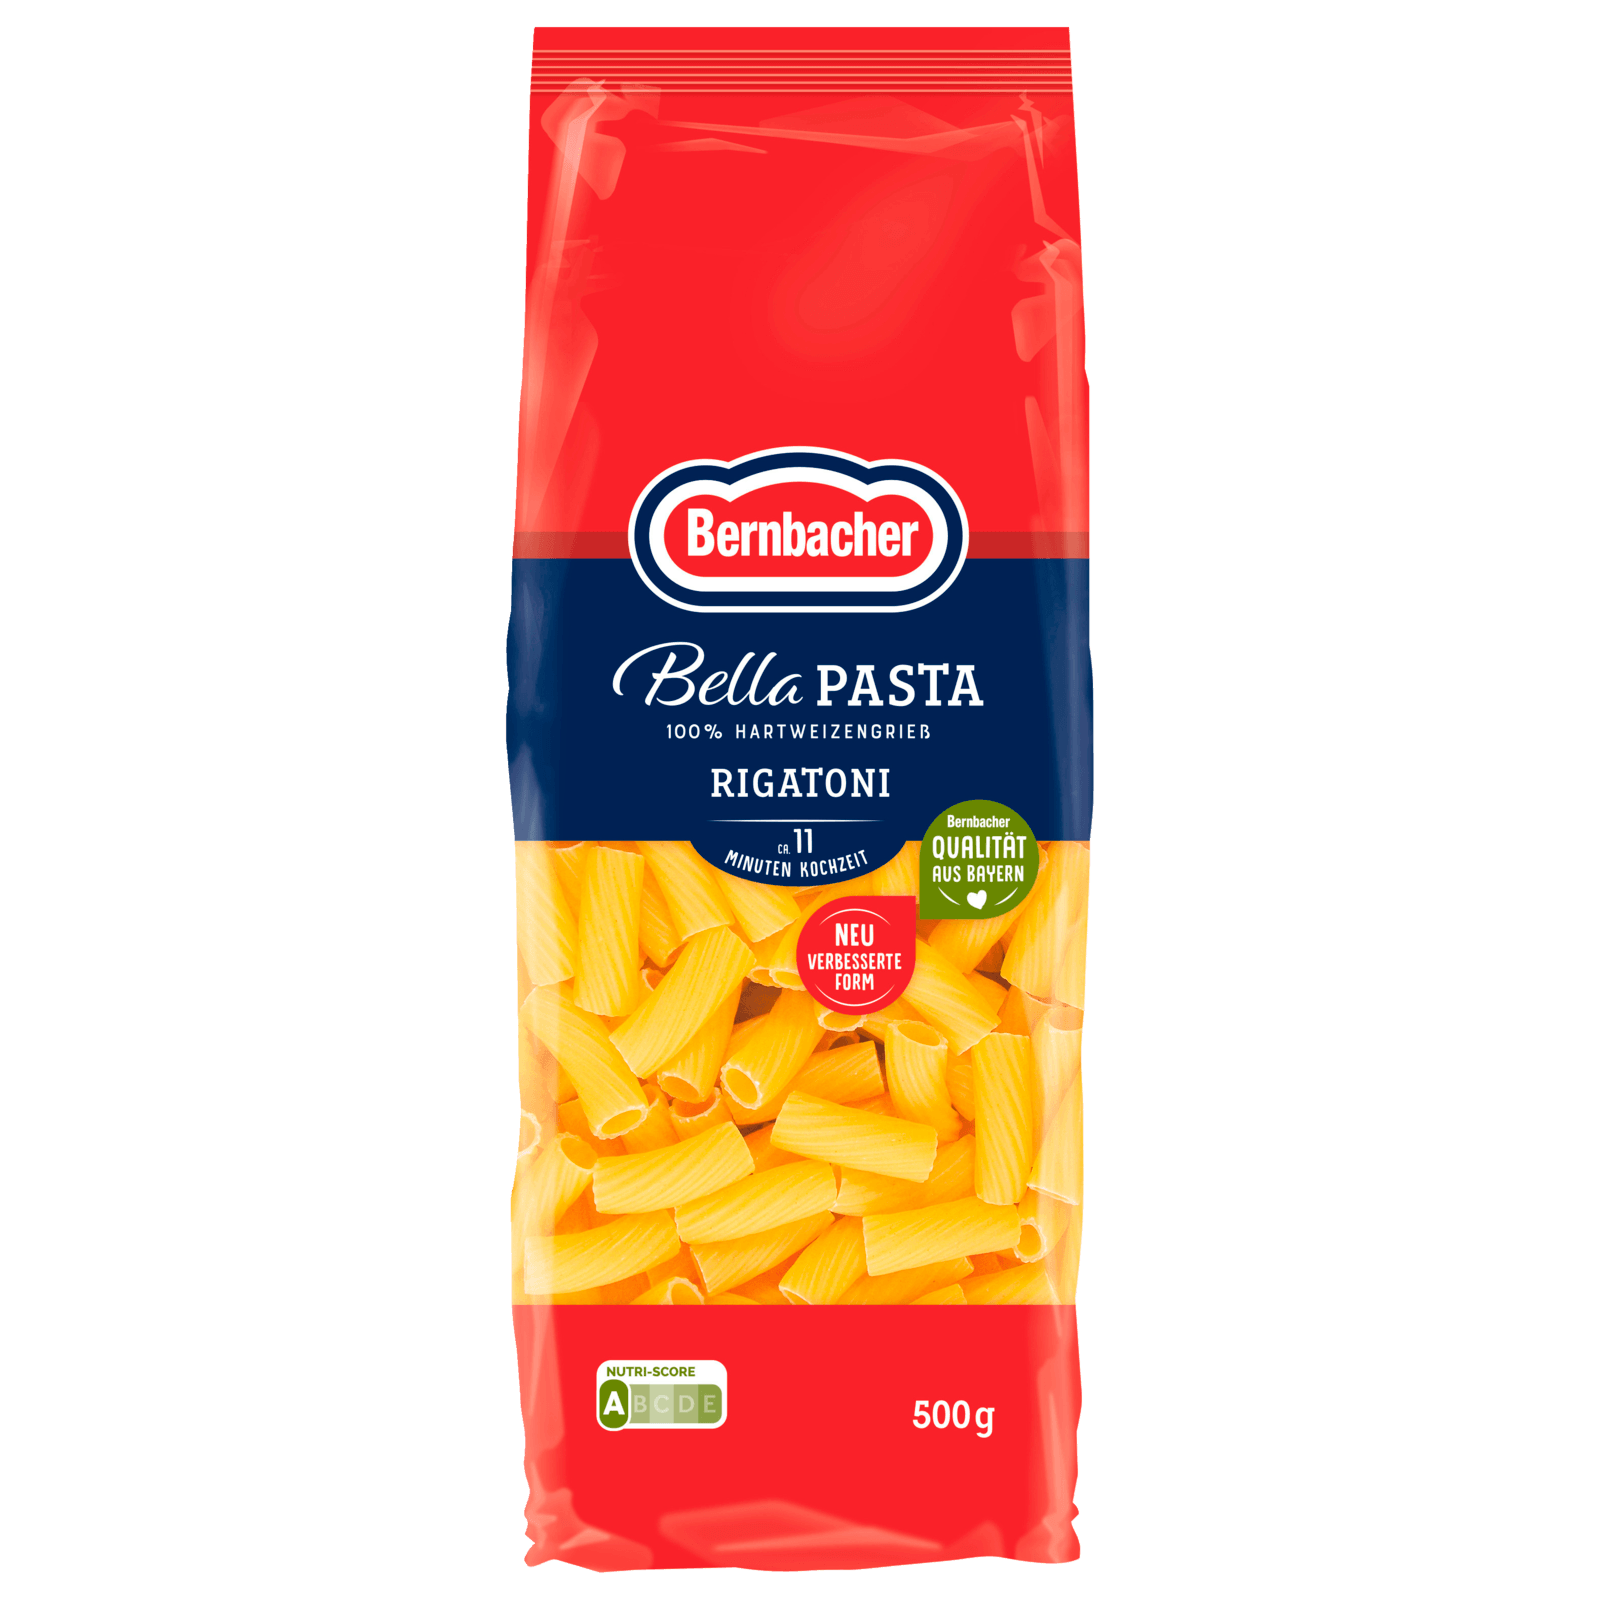 Bernbacher Bella Pasta Rigatoni 500g  für 1.79 EUR